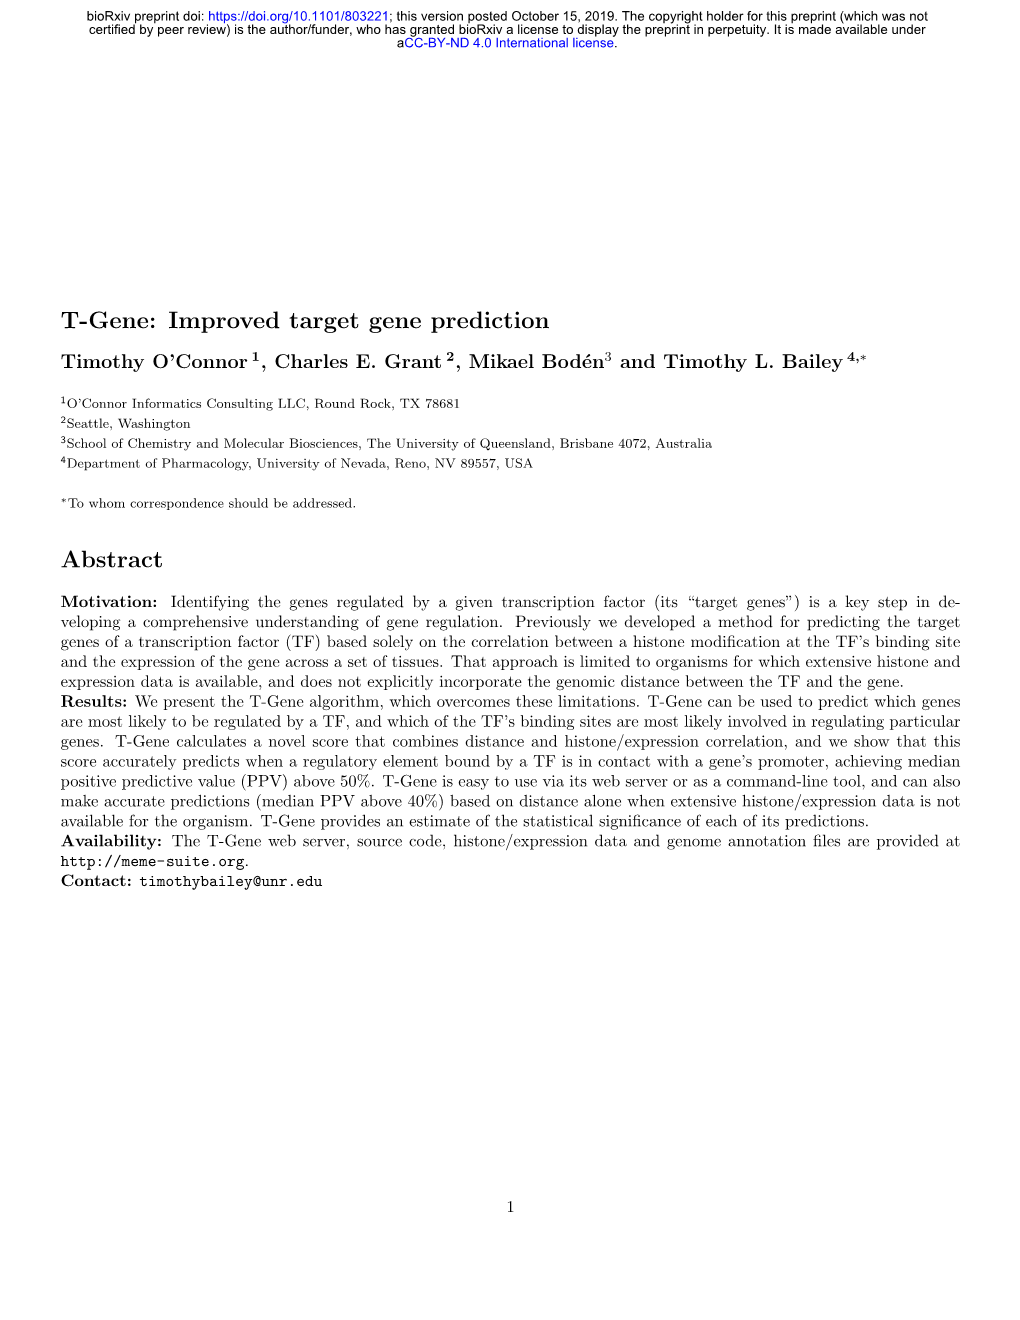 T-Gene: Improved Target Gene Prediction Timothy O’Connor 1, Charles E